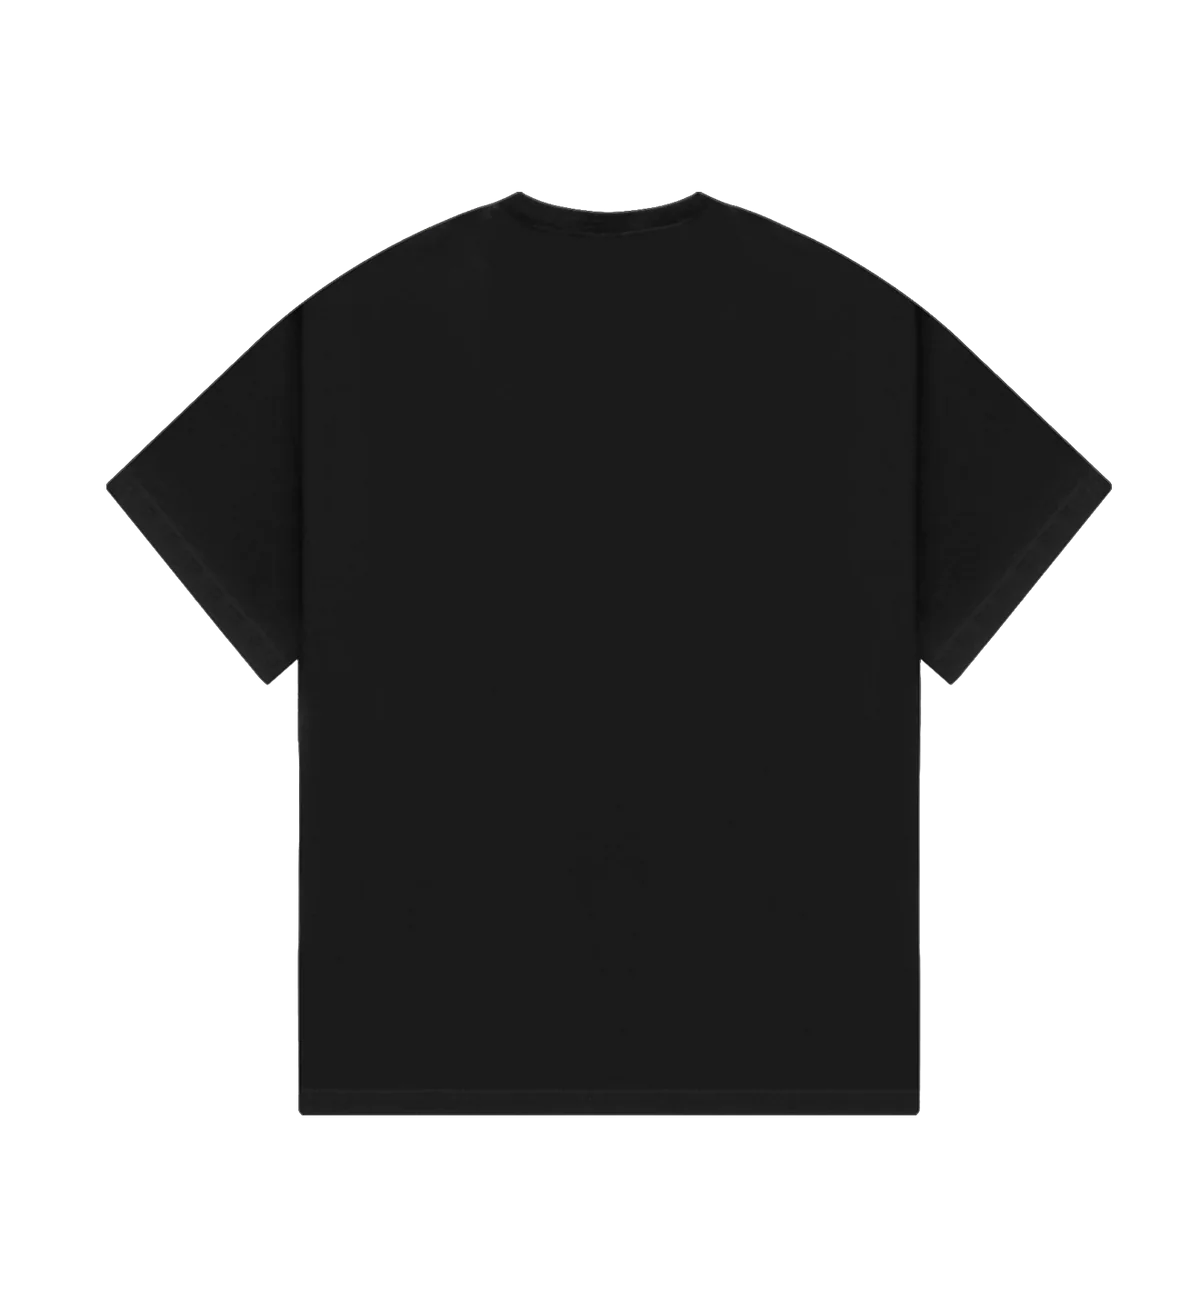 Logo T-Shirt Black